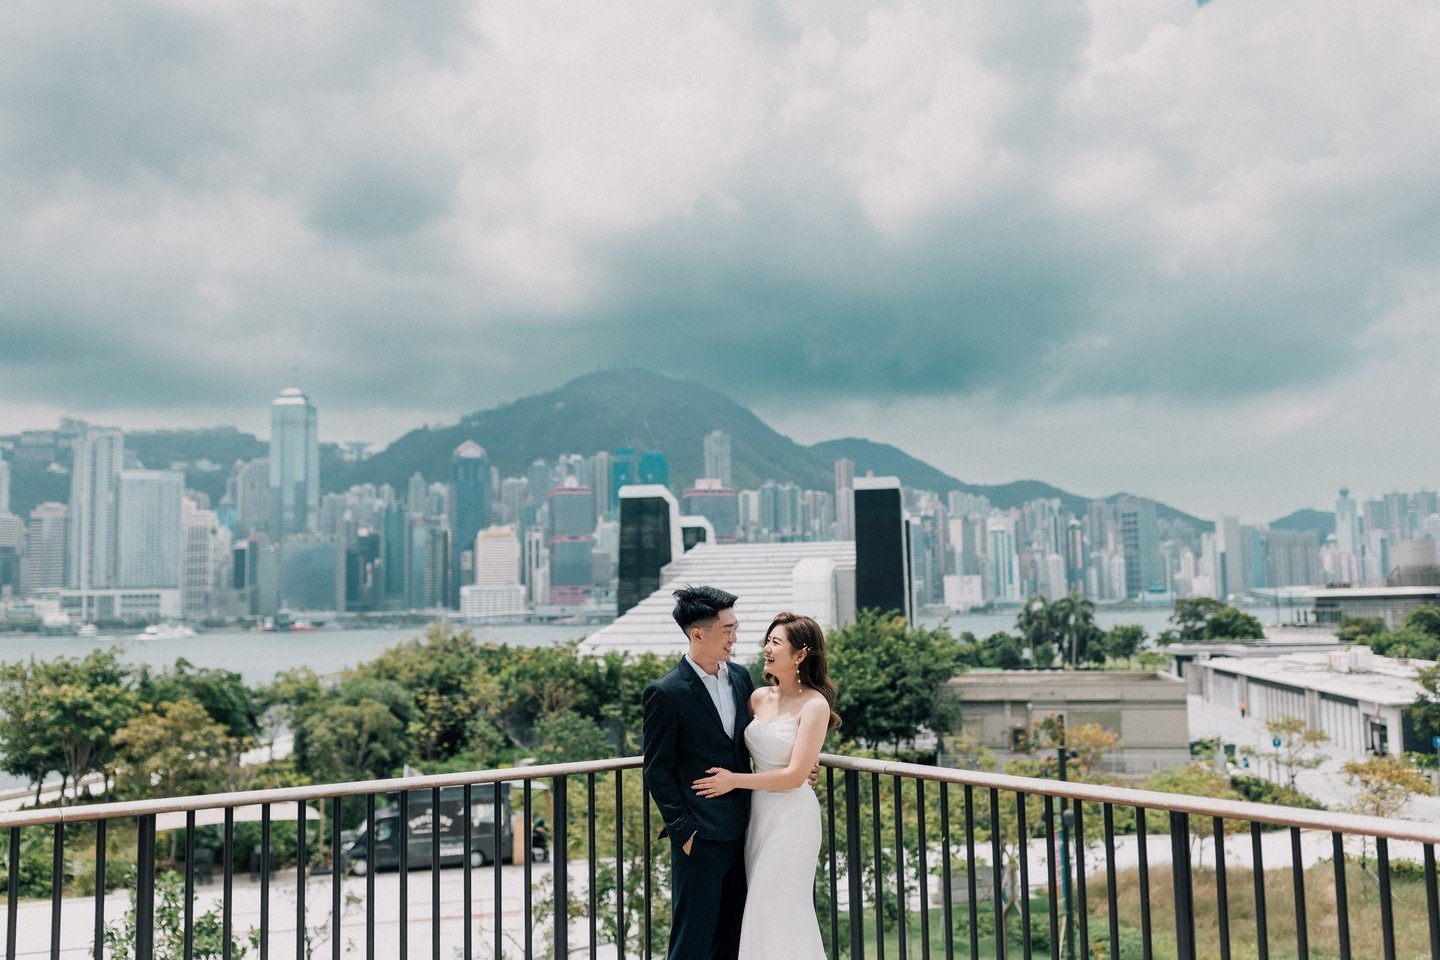 HK Pre-wedding Photography 

Website: https://www.themphoto.net

#浪漫之旅 #捕捉愛情瞬間 #PreWeddingShoot
#EuropePreWedding #DestinationPreWedding #RomanticEurope #EuropePhotography
#PreWeddingPhotographer #EuropeWedding #DreamyDestination #MemoriesInEurope
#P